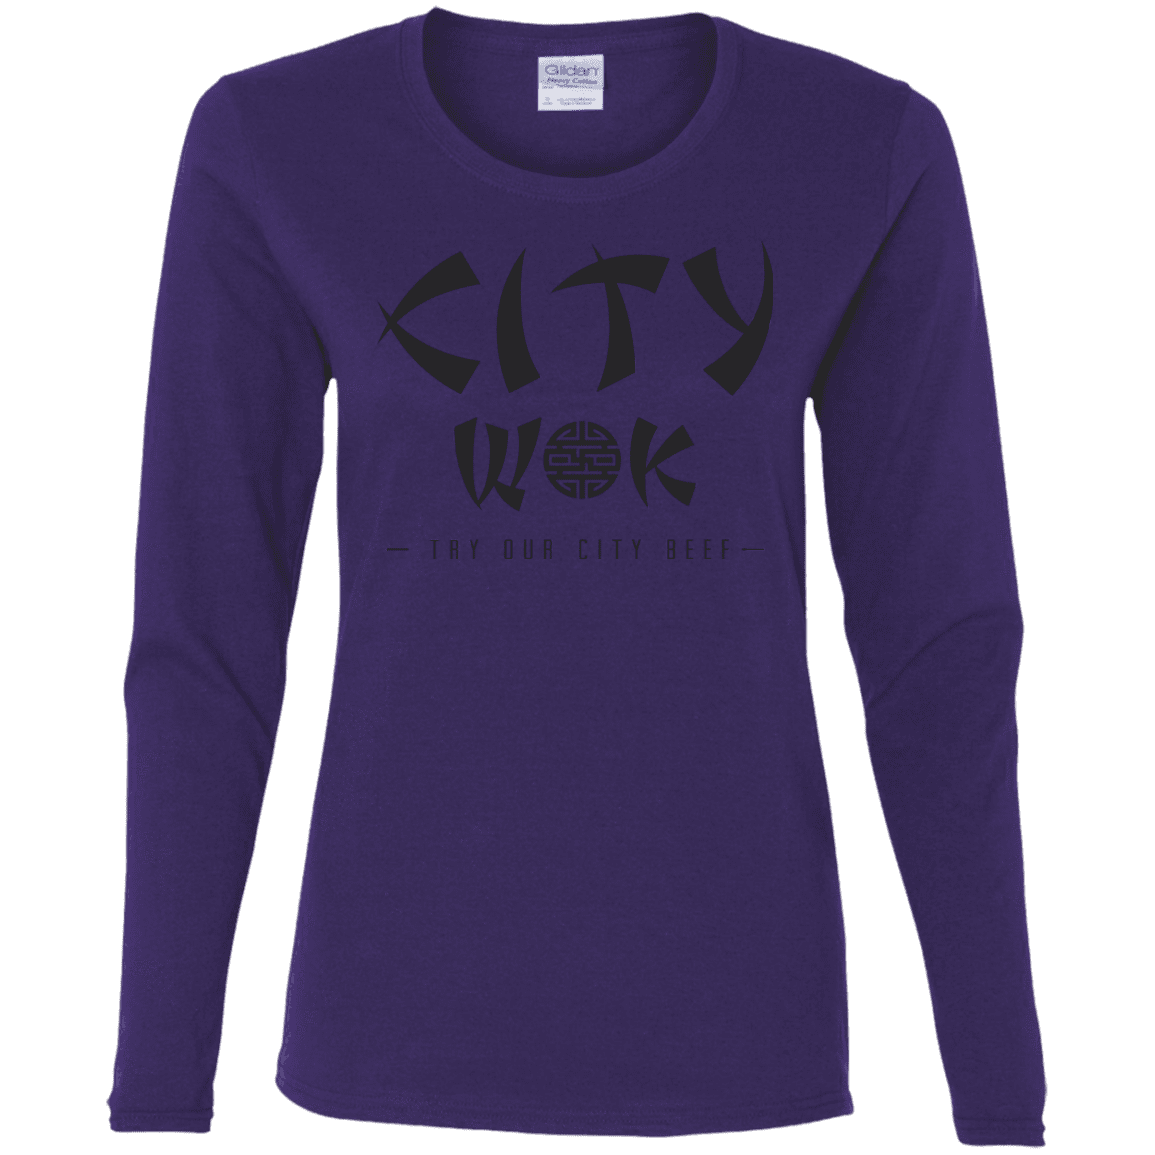 T-Shirts Purple / S City Wok Women's Long Sleeve T-Shirt